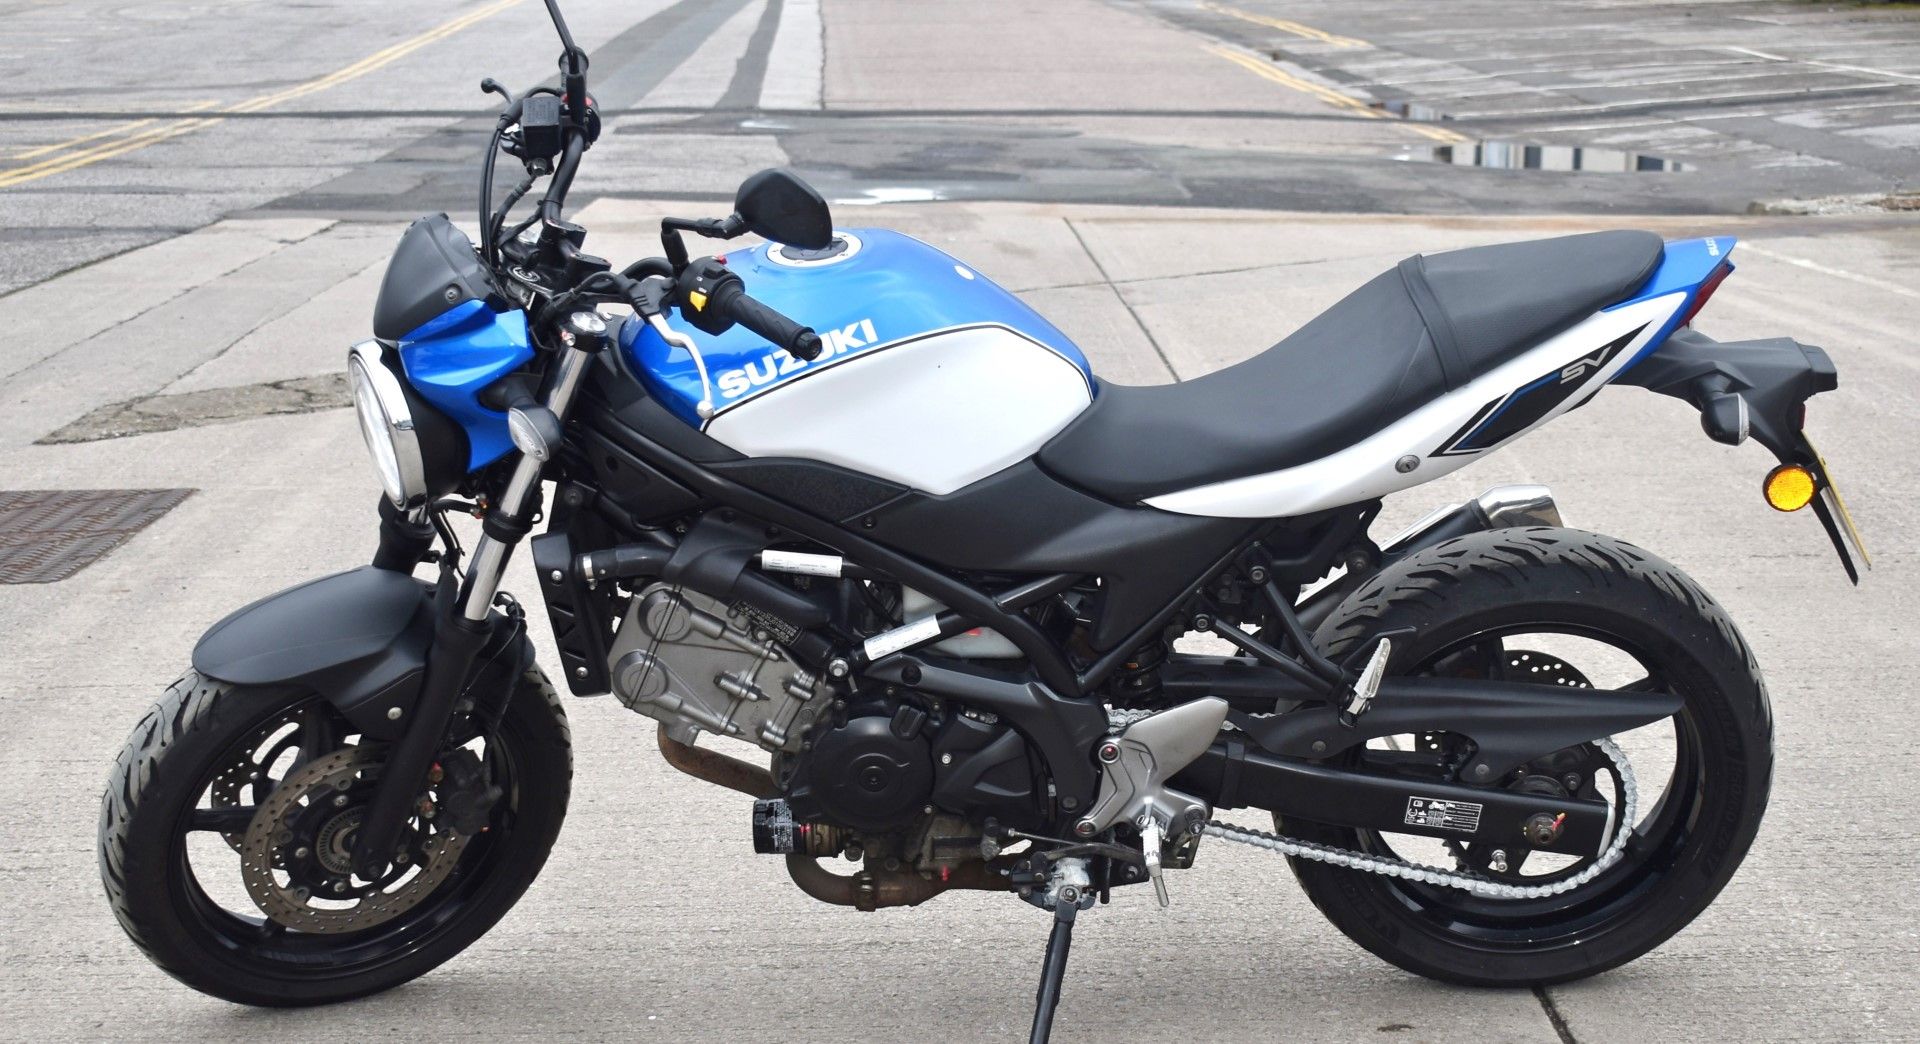 2018 Suzuki SV650 Motorcycle - BA18 UFV - Mileage: 18,188